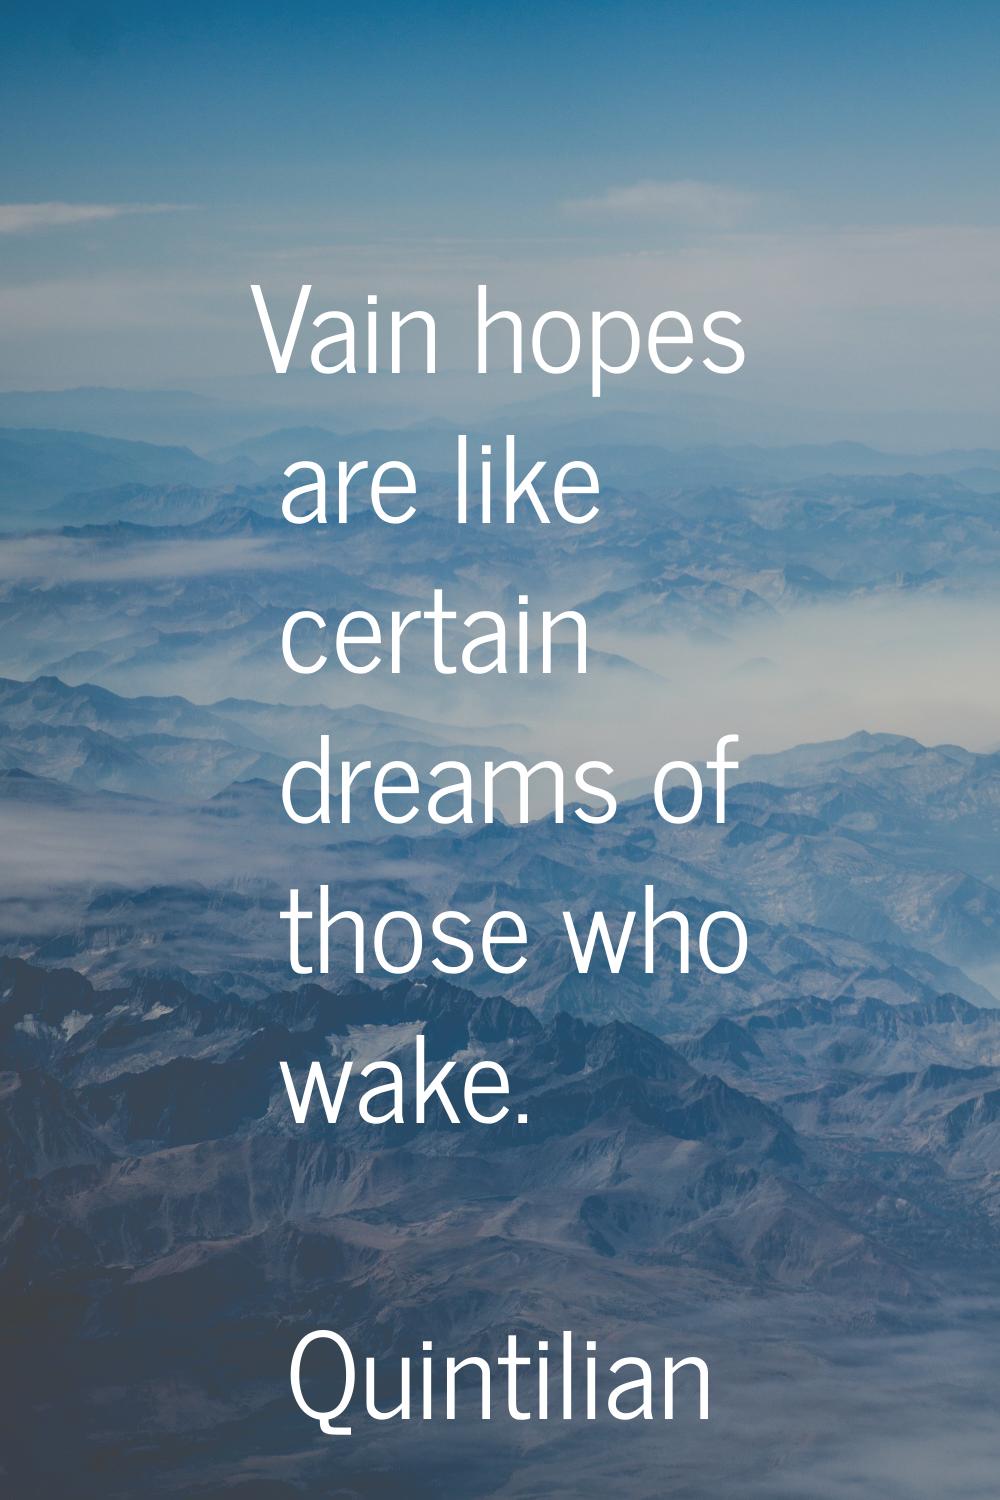 Vain hopes are like certain dreams of those who wake.